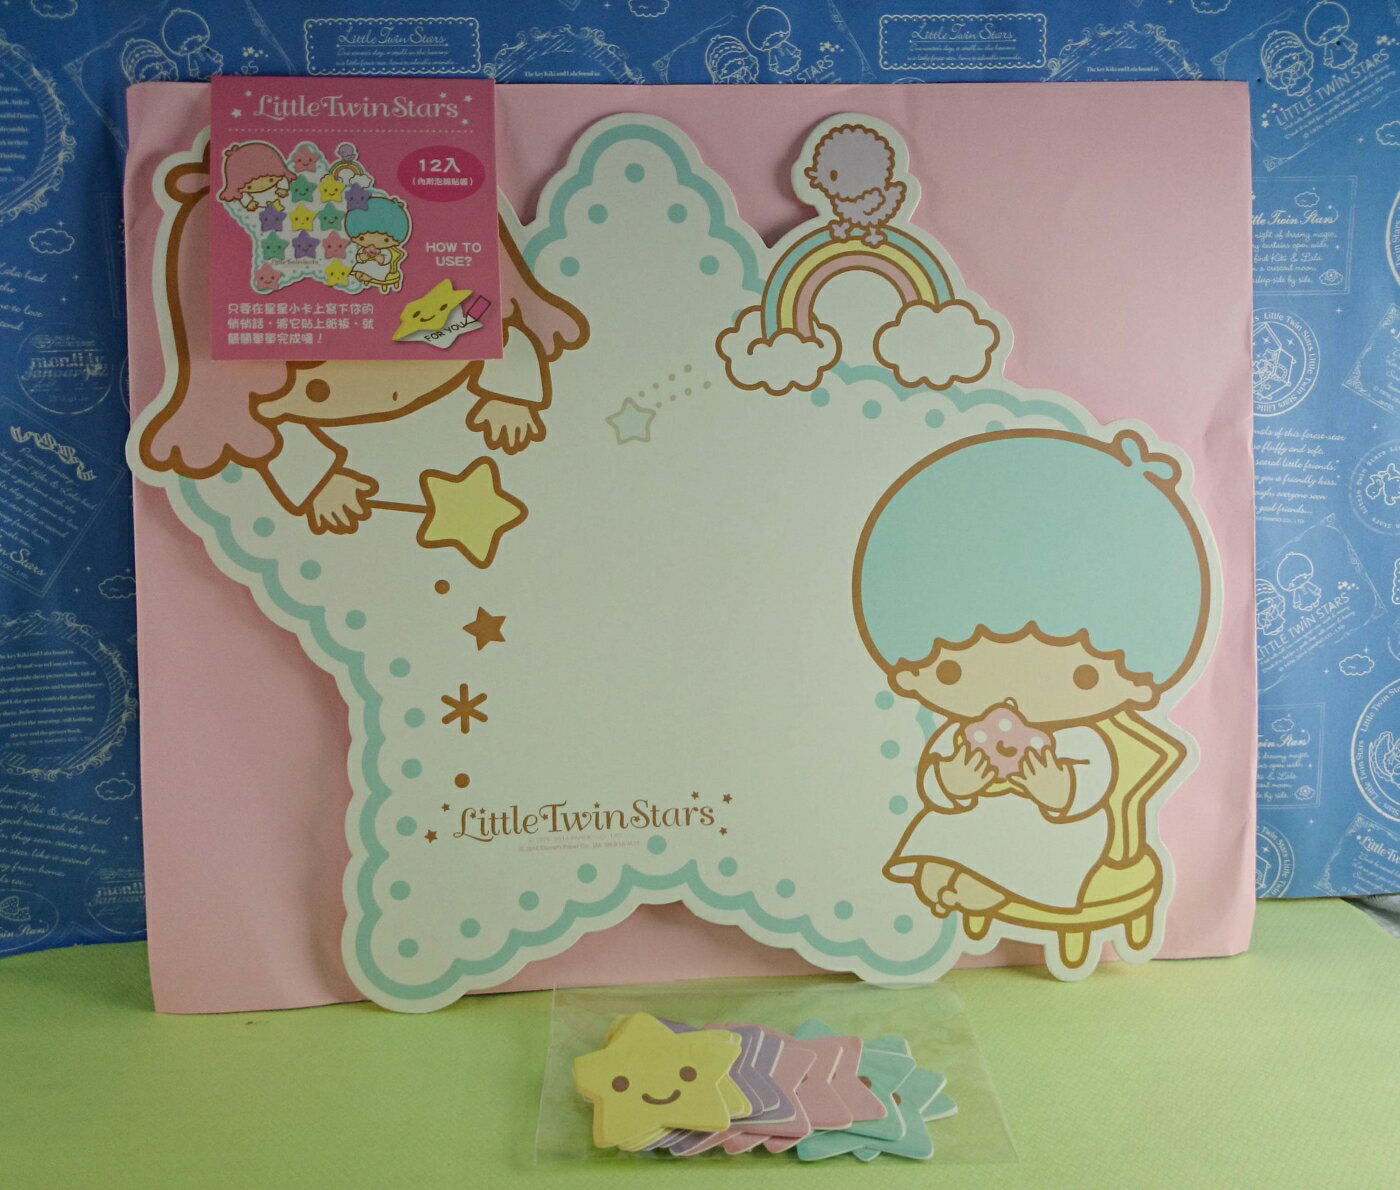 【震撼精品百貨】Little Twin Stars KiKi&LaLa 雙子星小天使 造型卡片 星星 震撼日式精品百貨